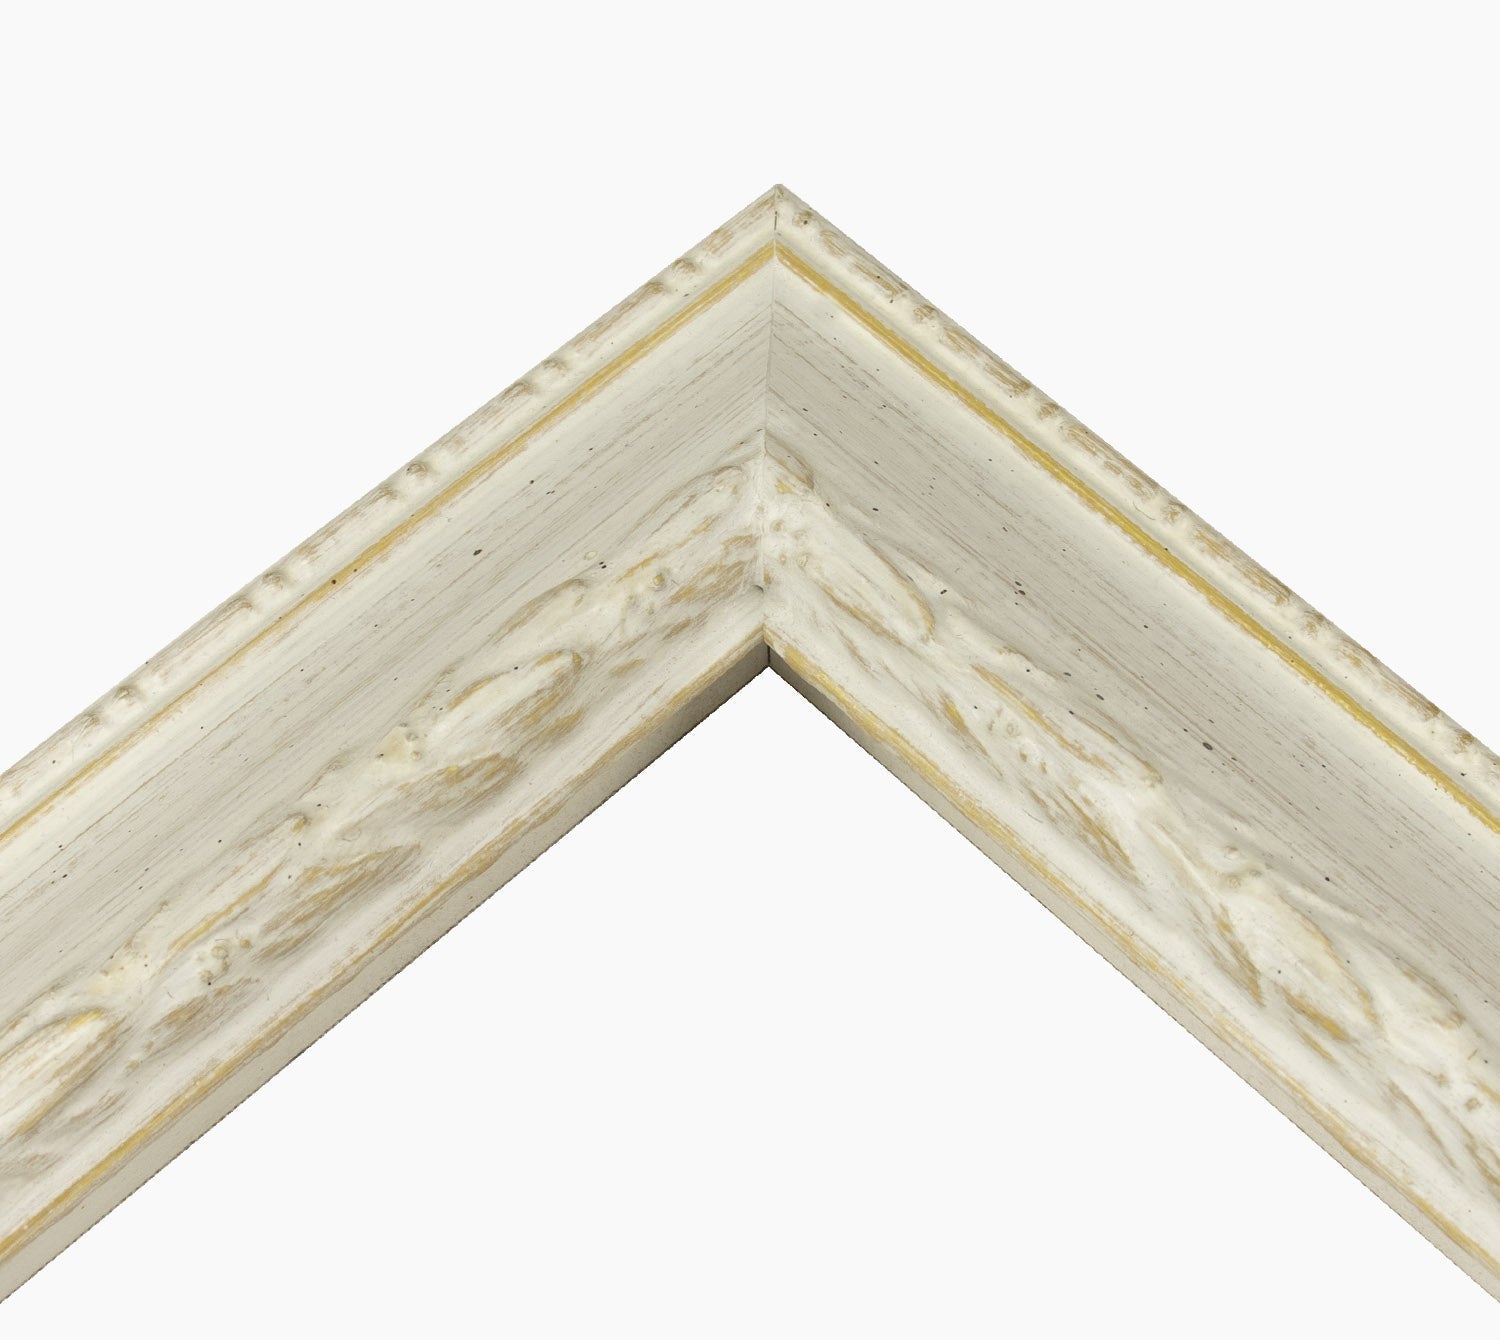 278.915 cadre en bois à fond ocre blanc mesure de profil 60x45 mm Lombarda cornici S.n.c.